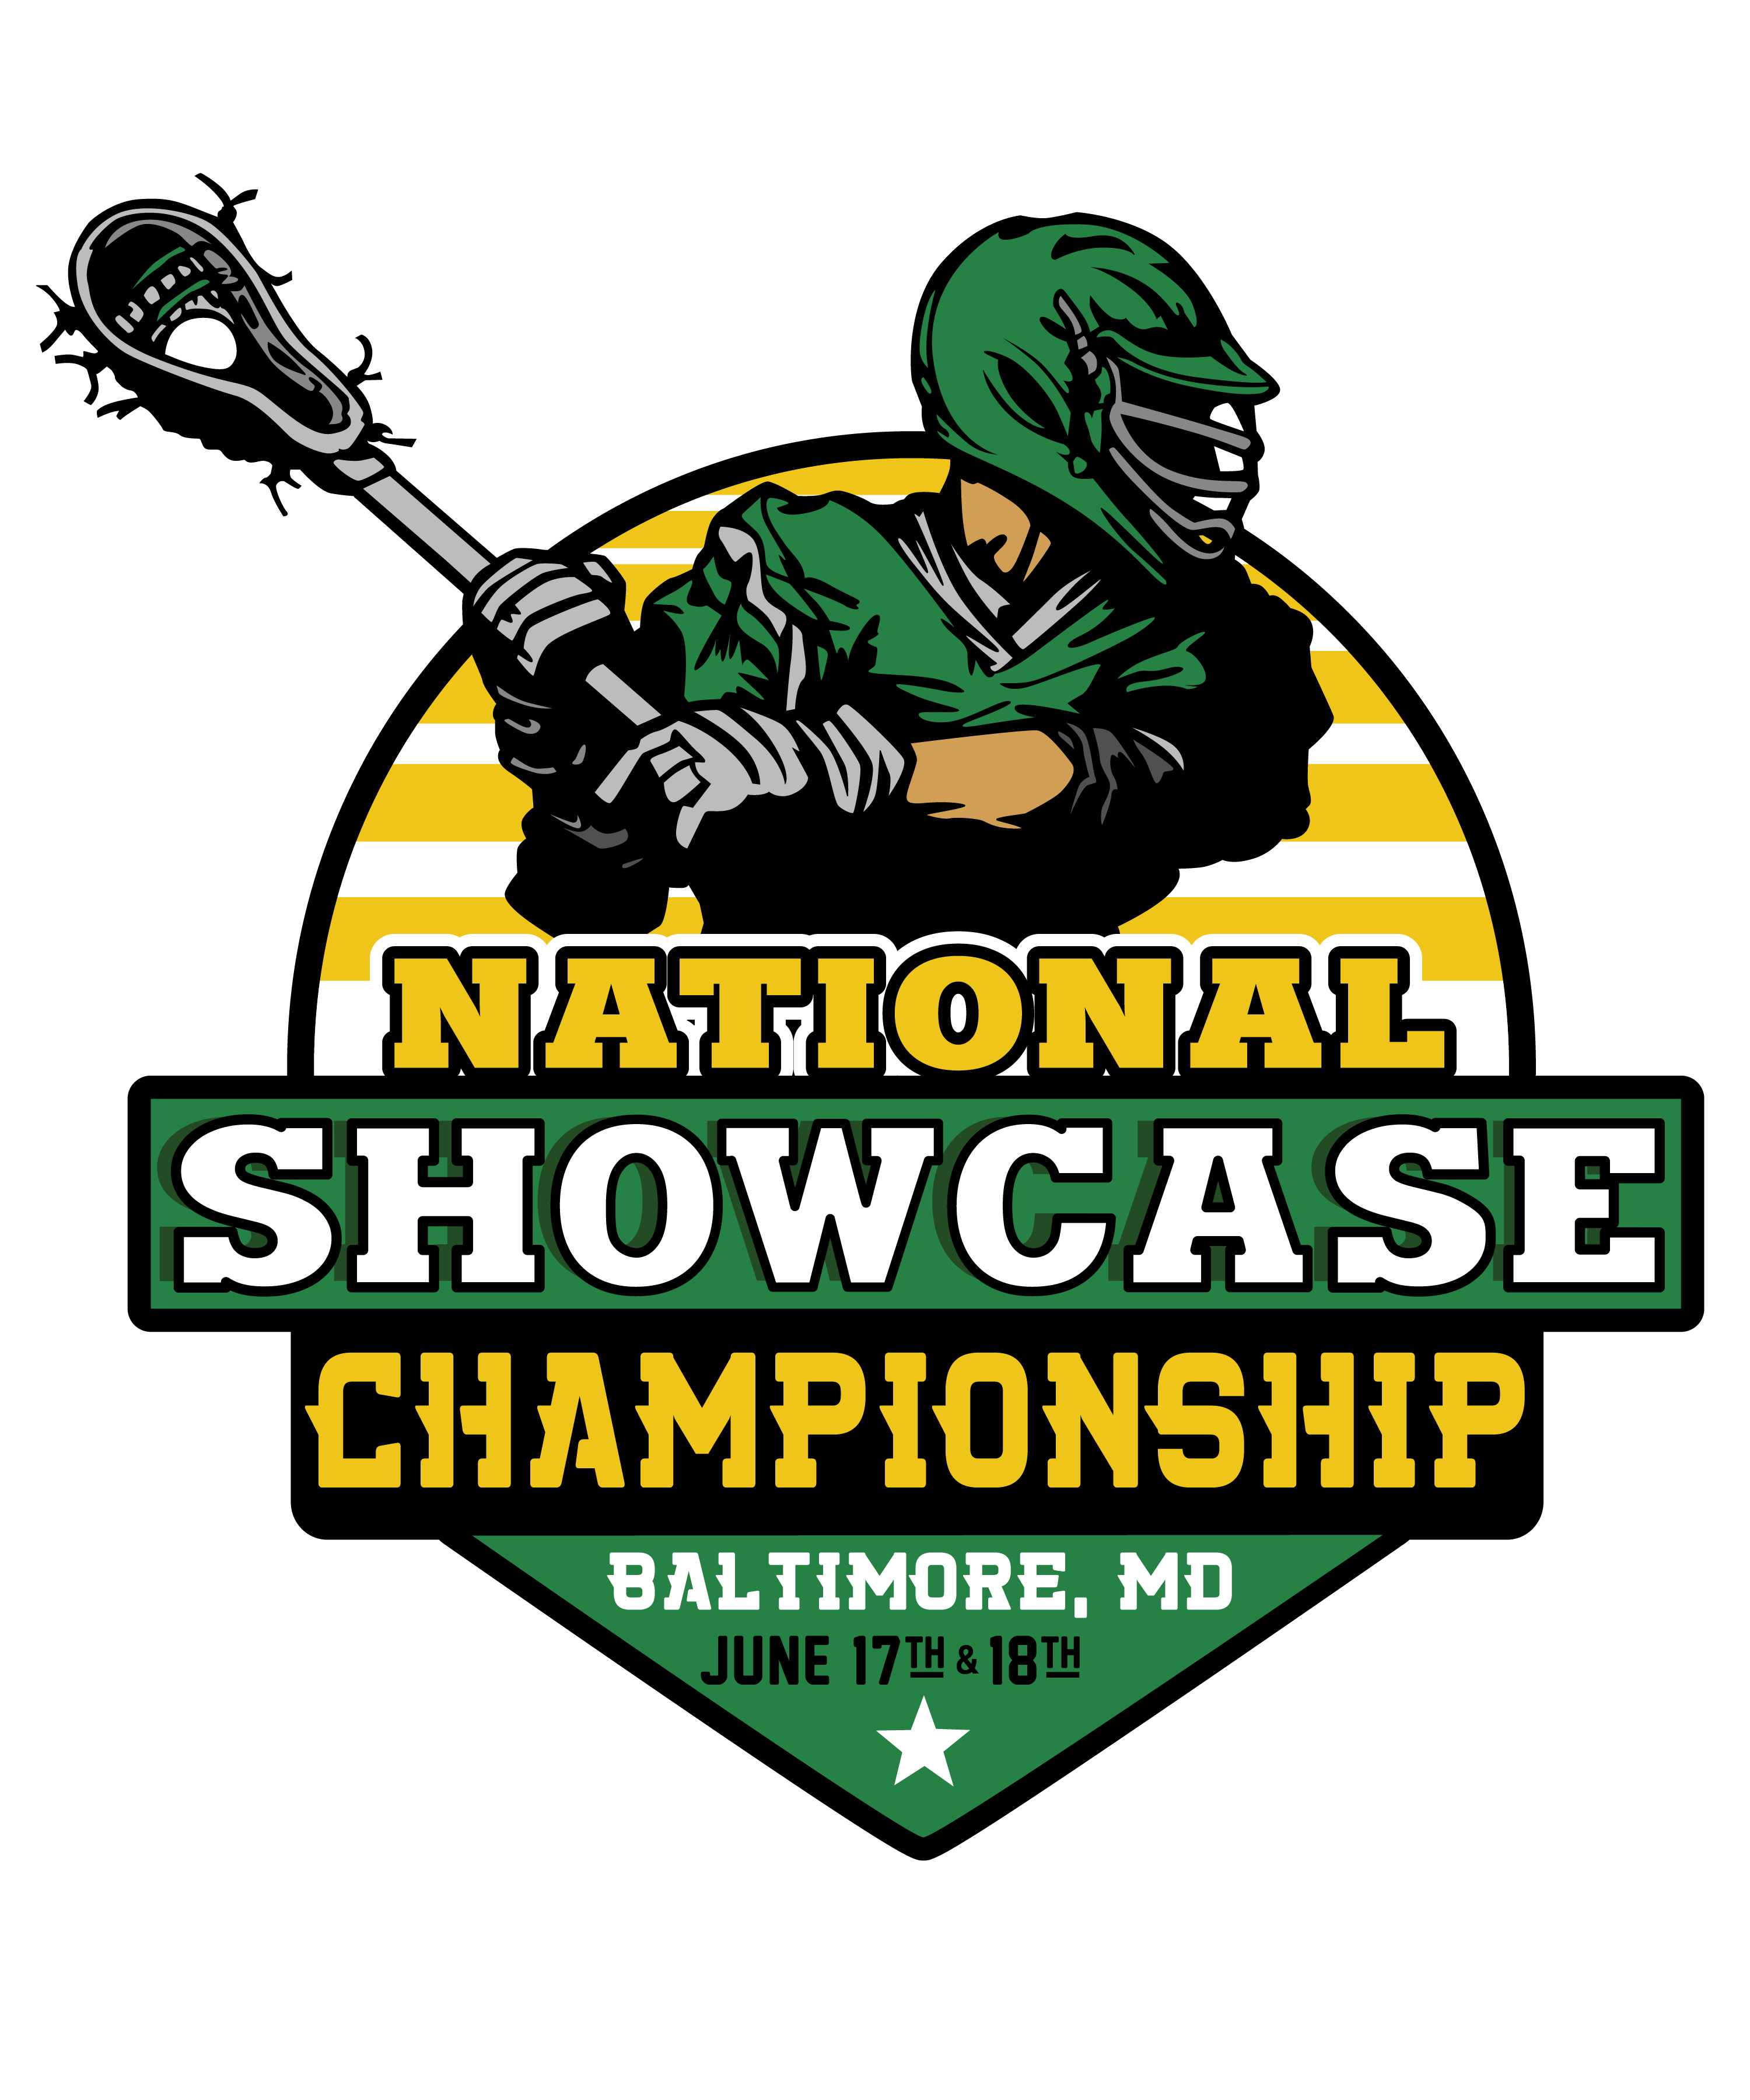 National Showcase Championship